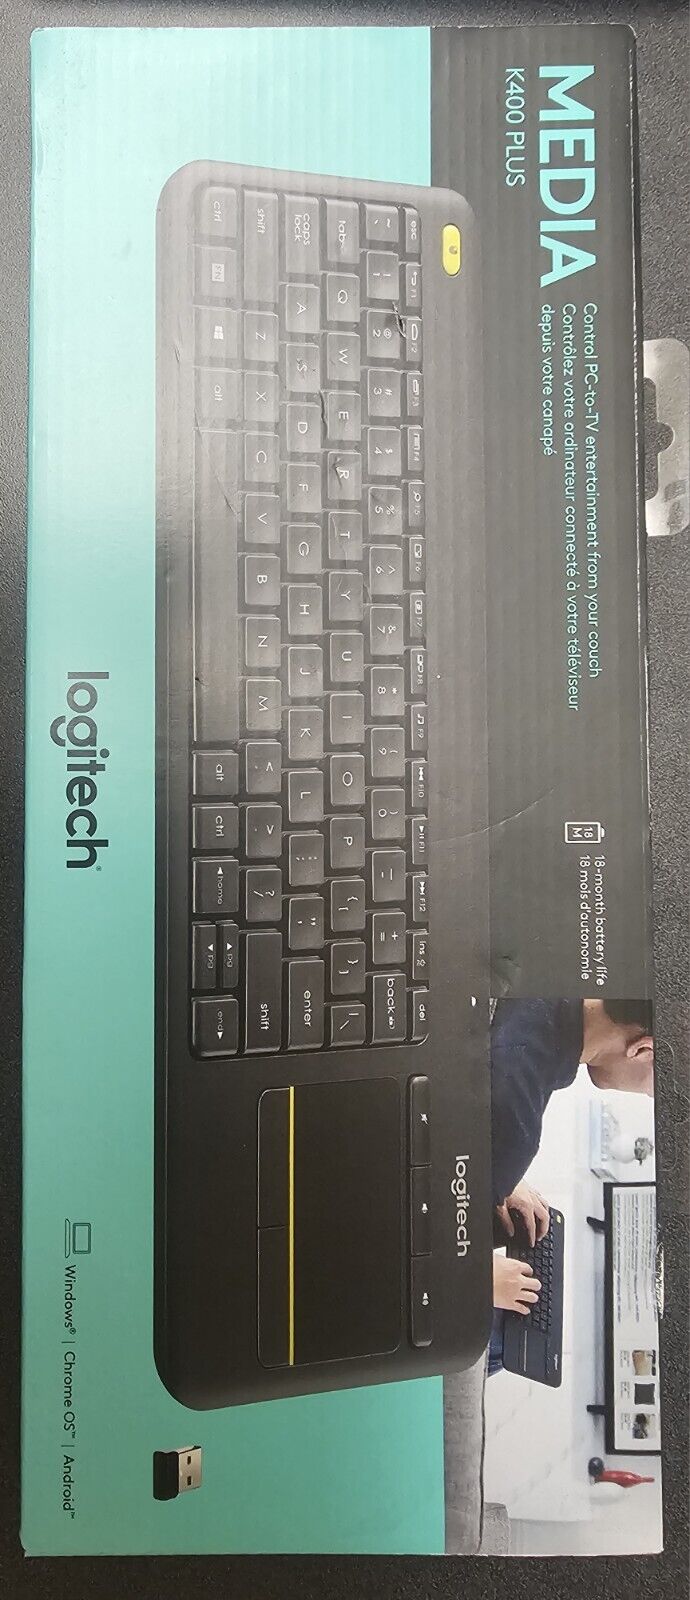 Logitech K400 Plus Wireless Keyboard with Touchpad (920-007119)